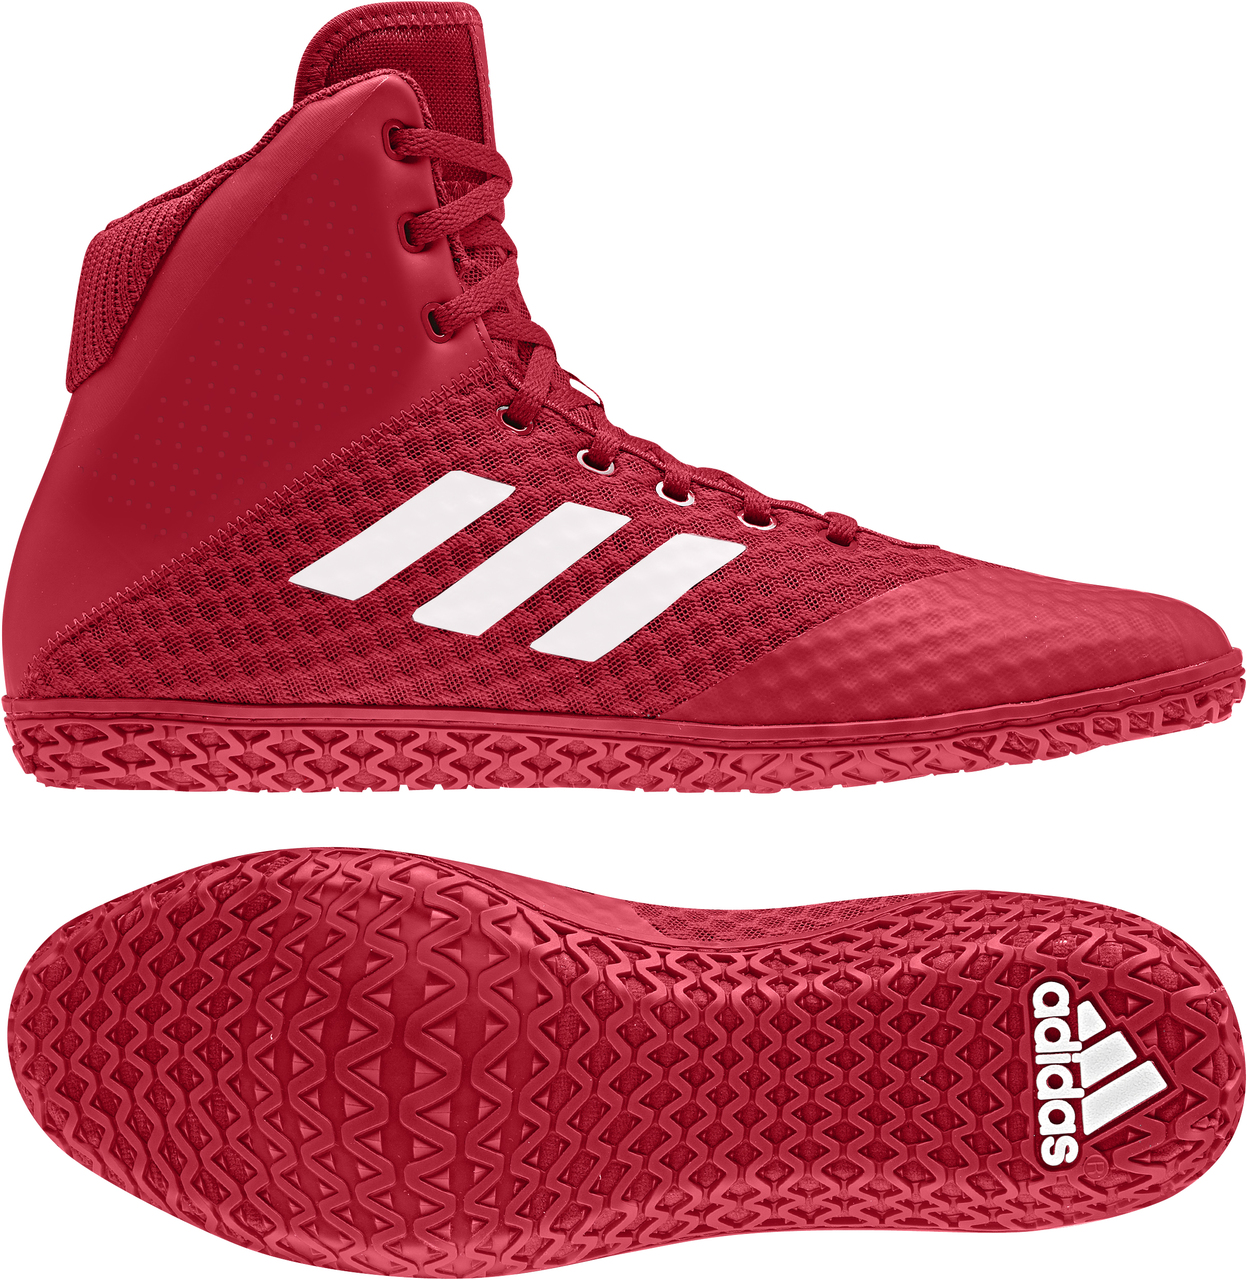 adidas mat wizard david taylor edition wrestling shoes